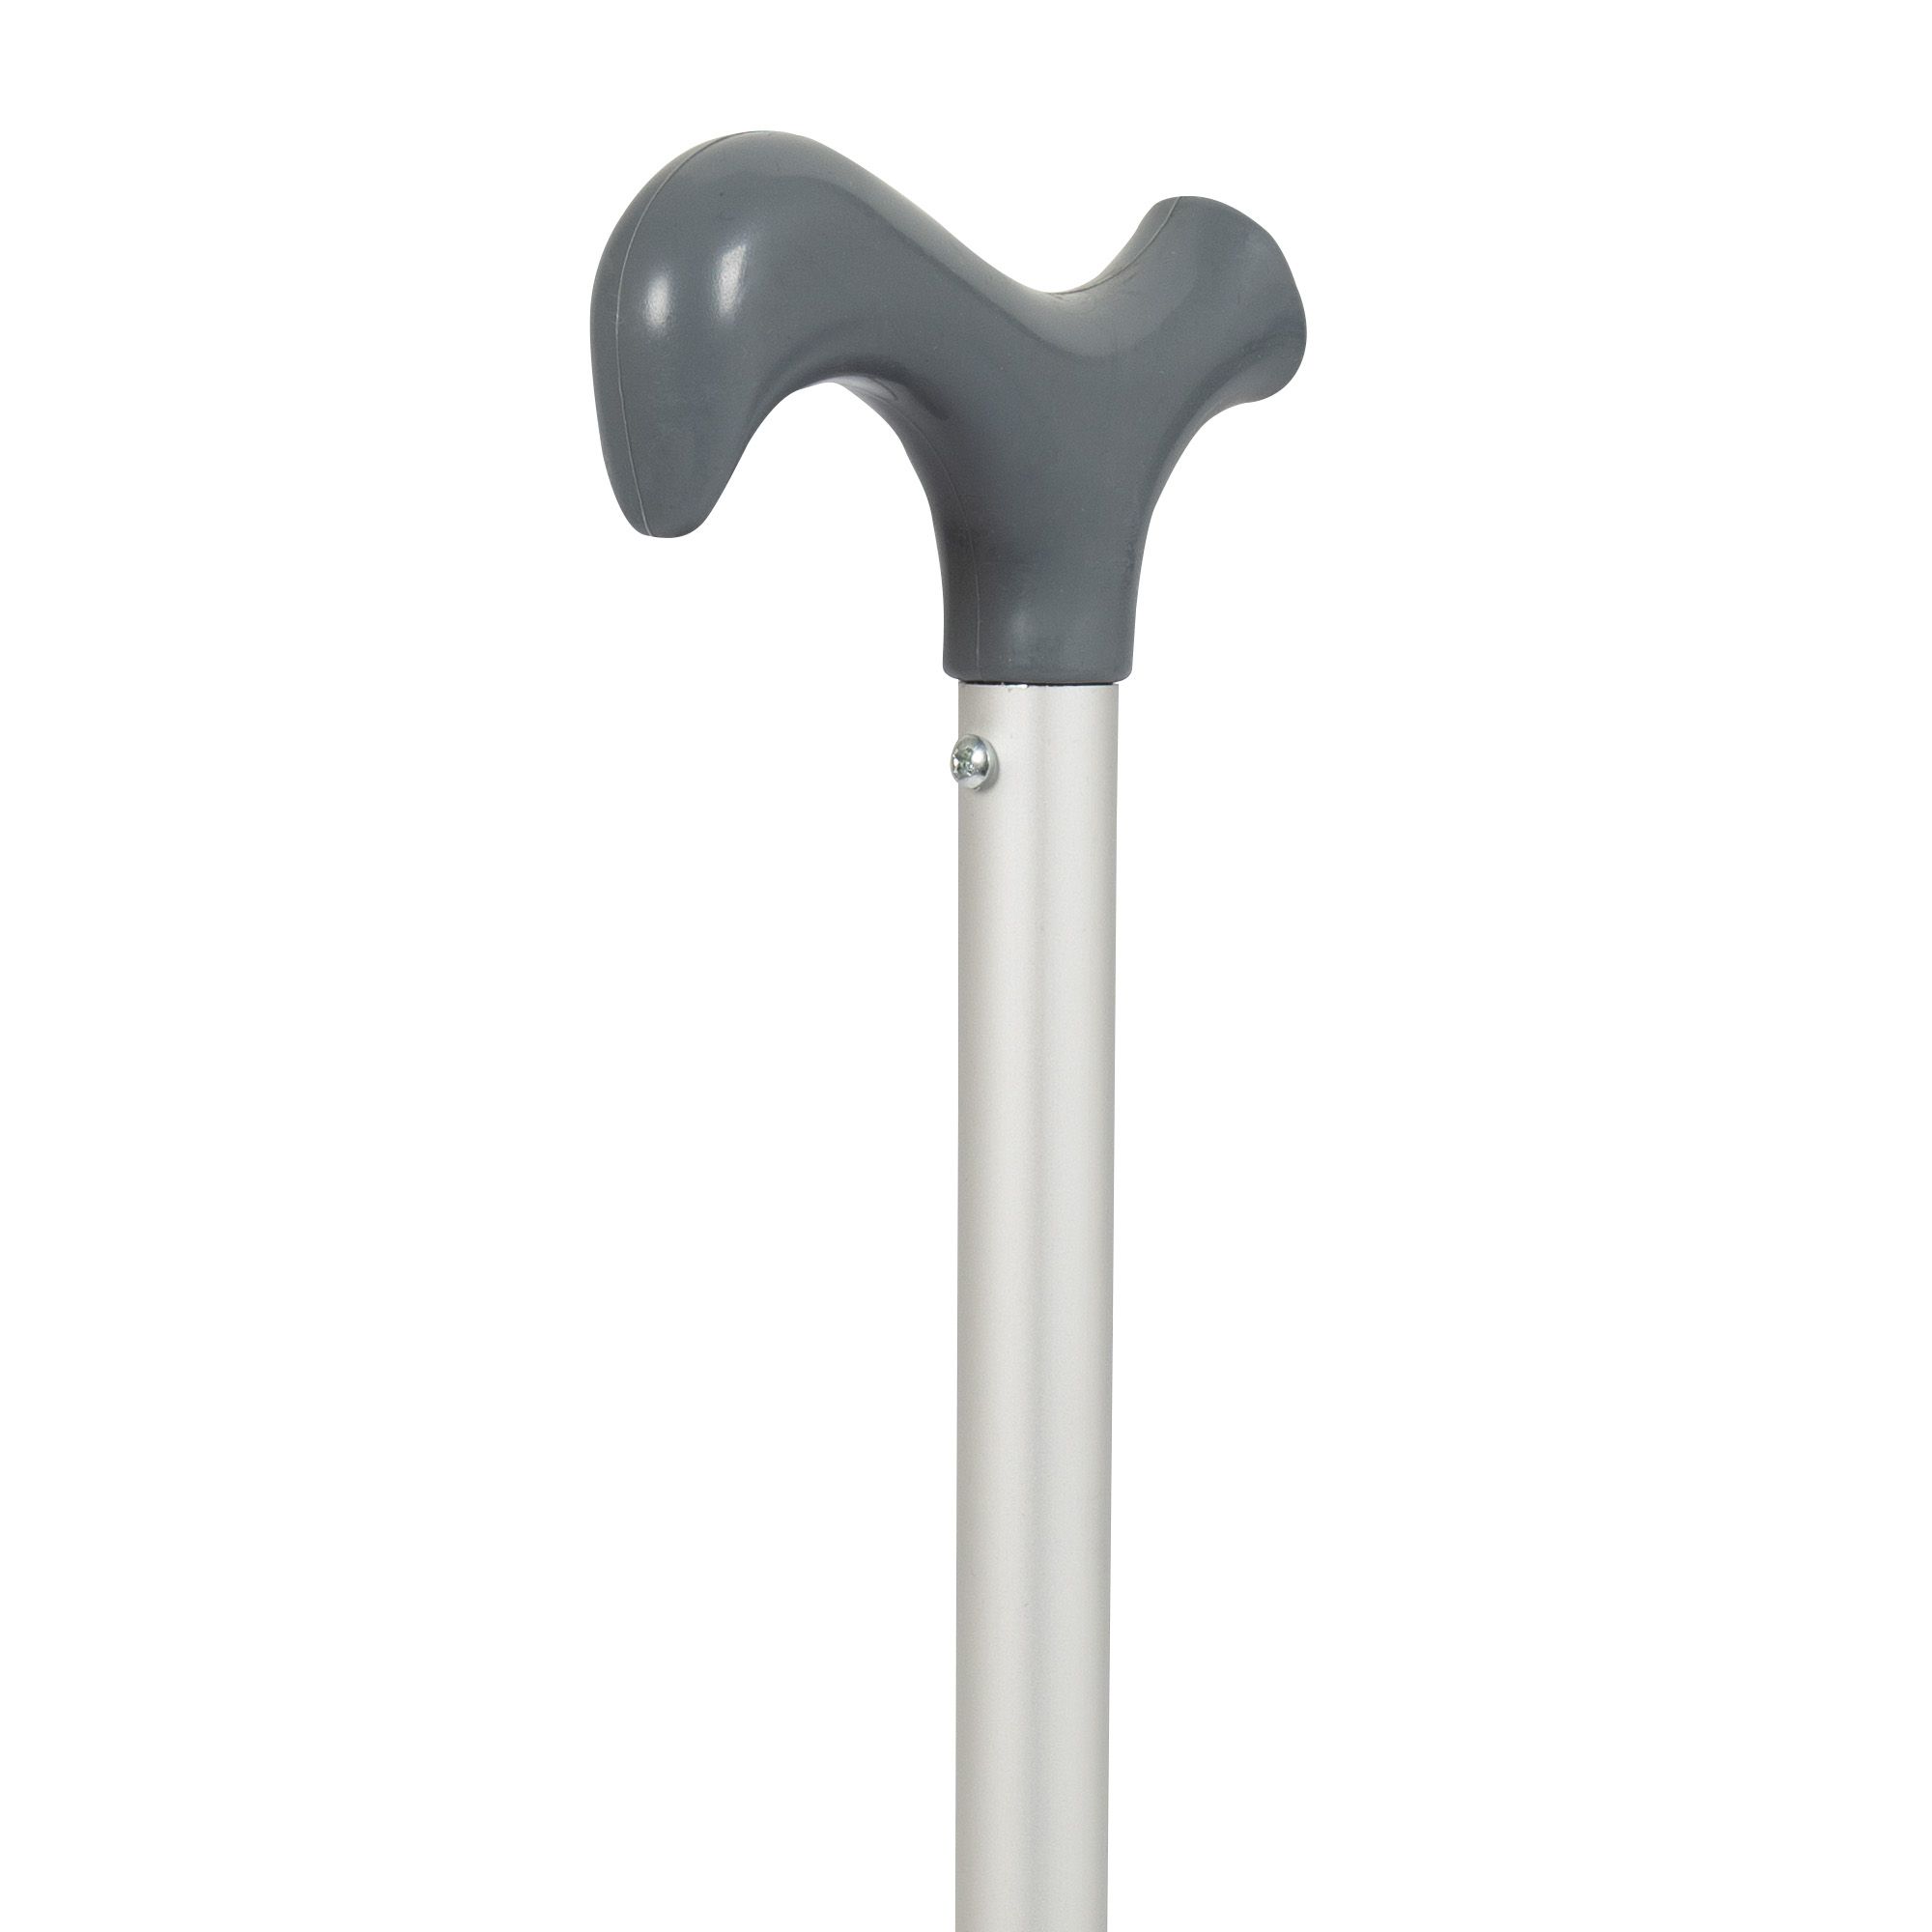 Novamed Anatomic Aluminum Walking Stick handle from front